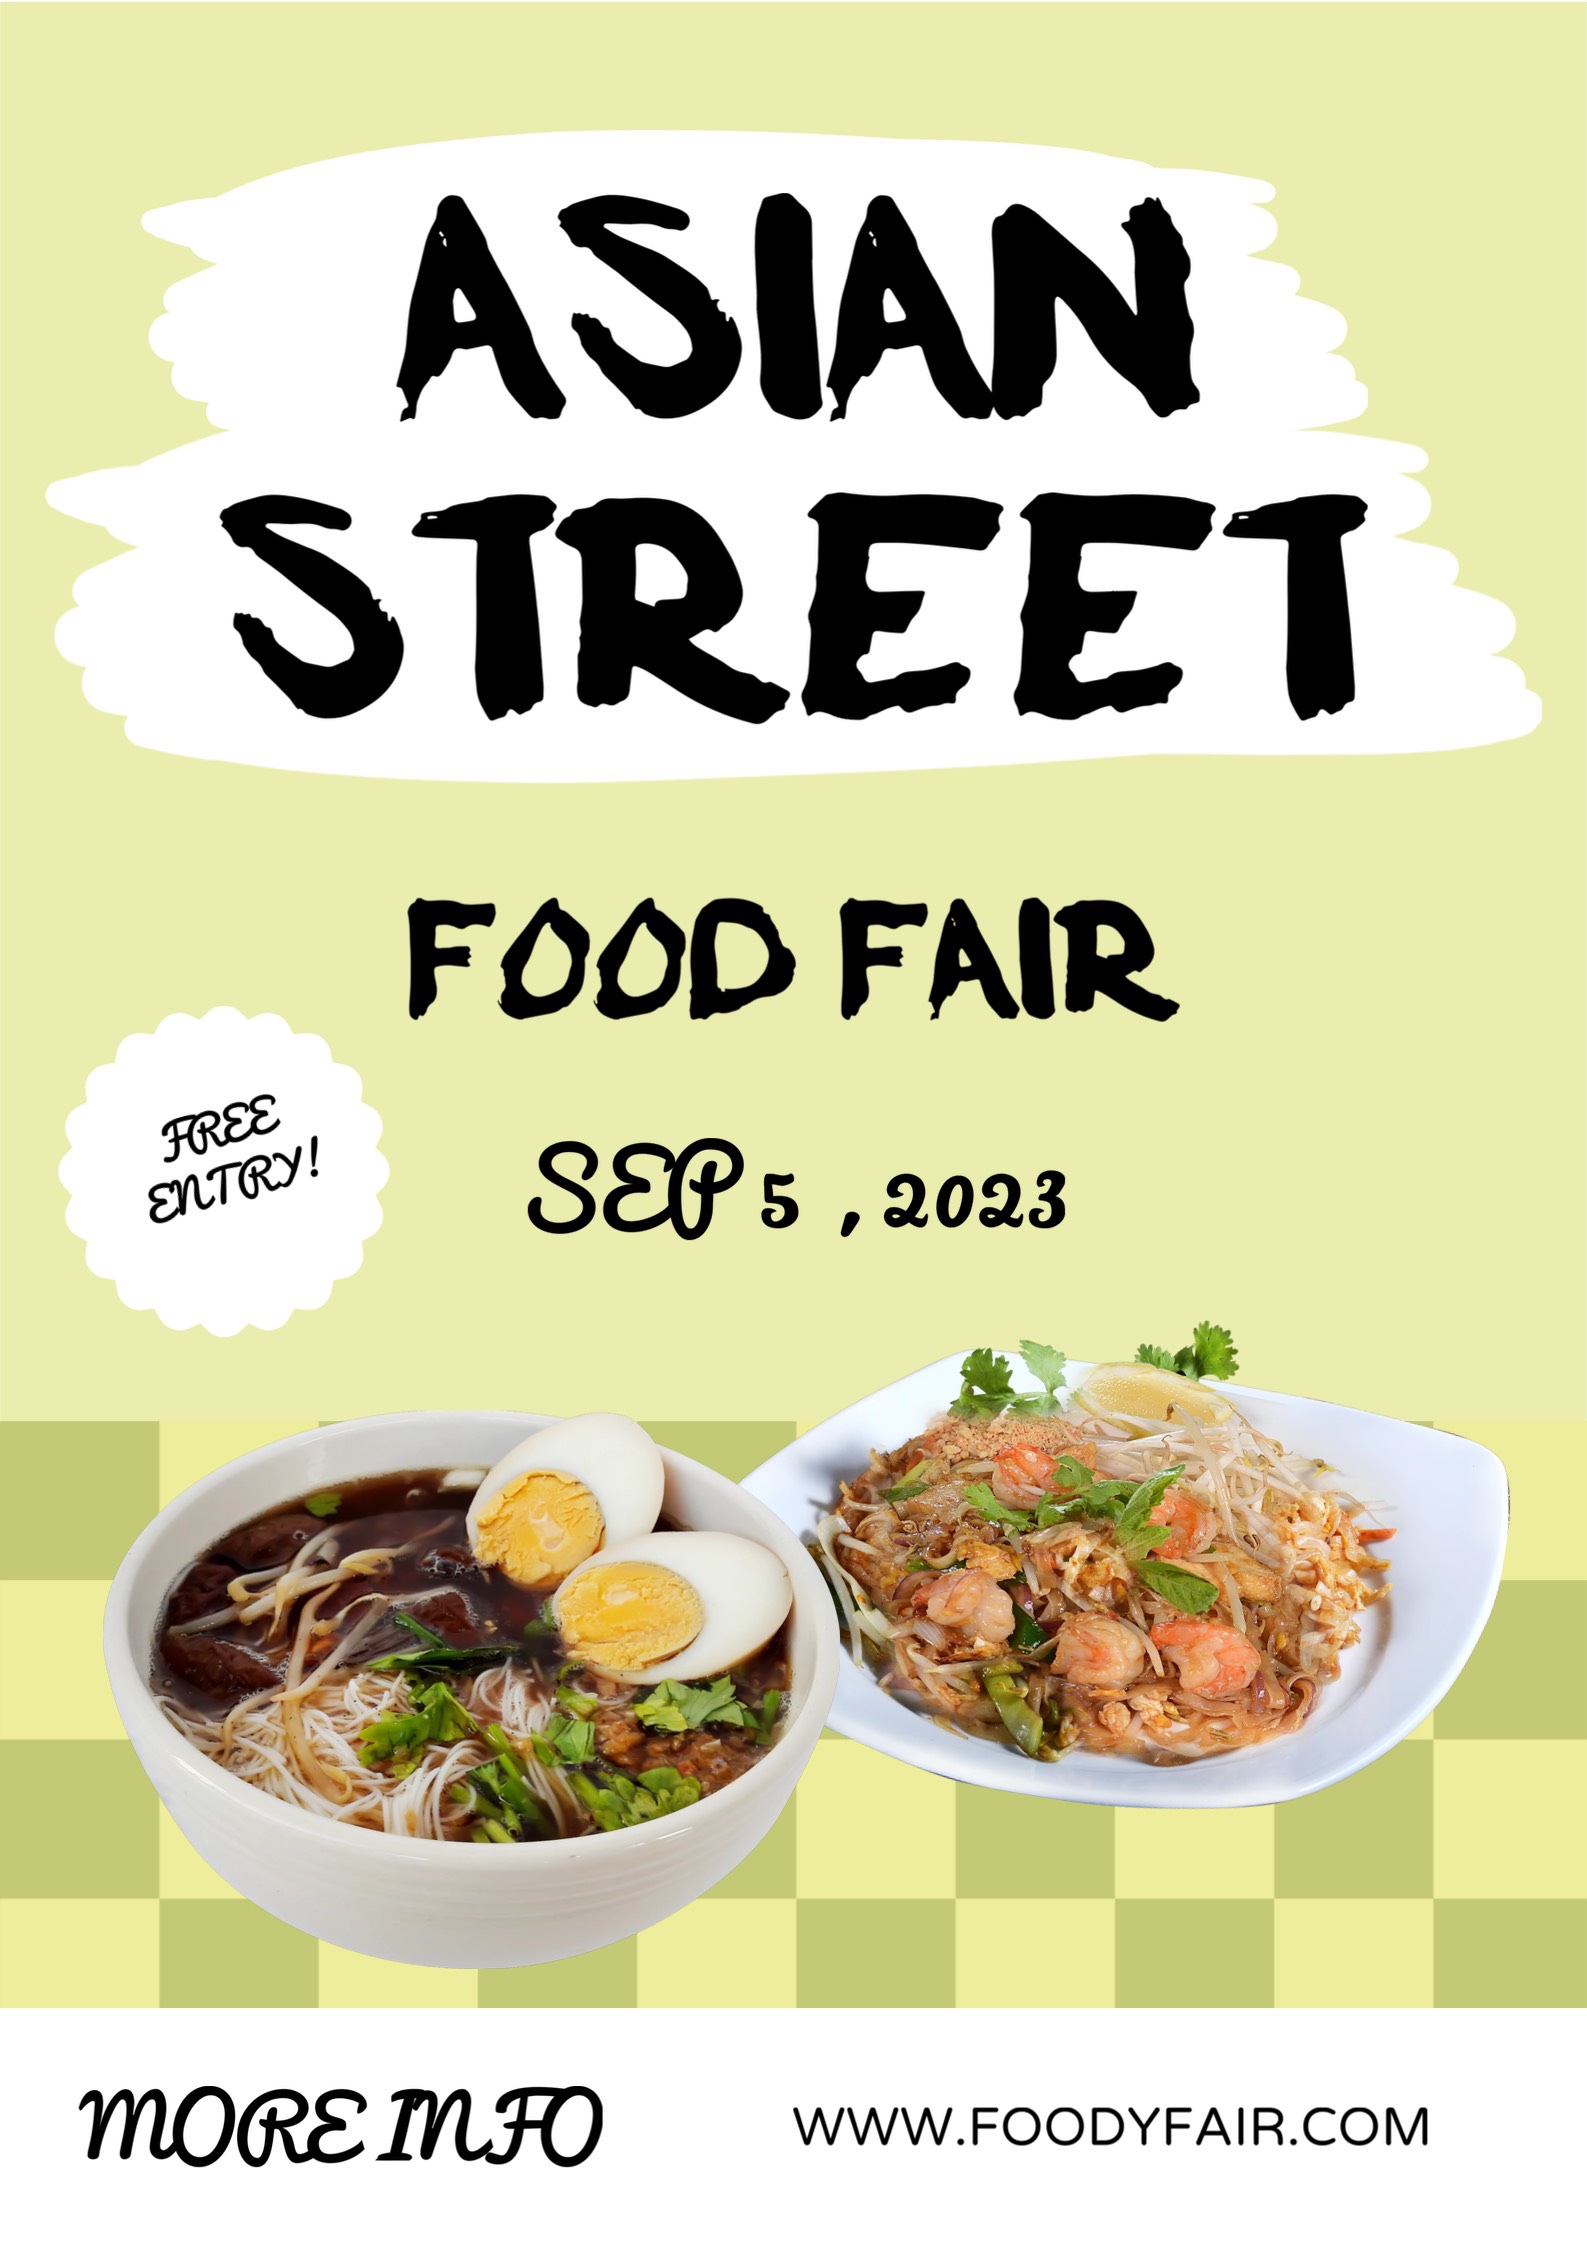 Green Illustrated Asian street food market Poster